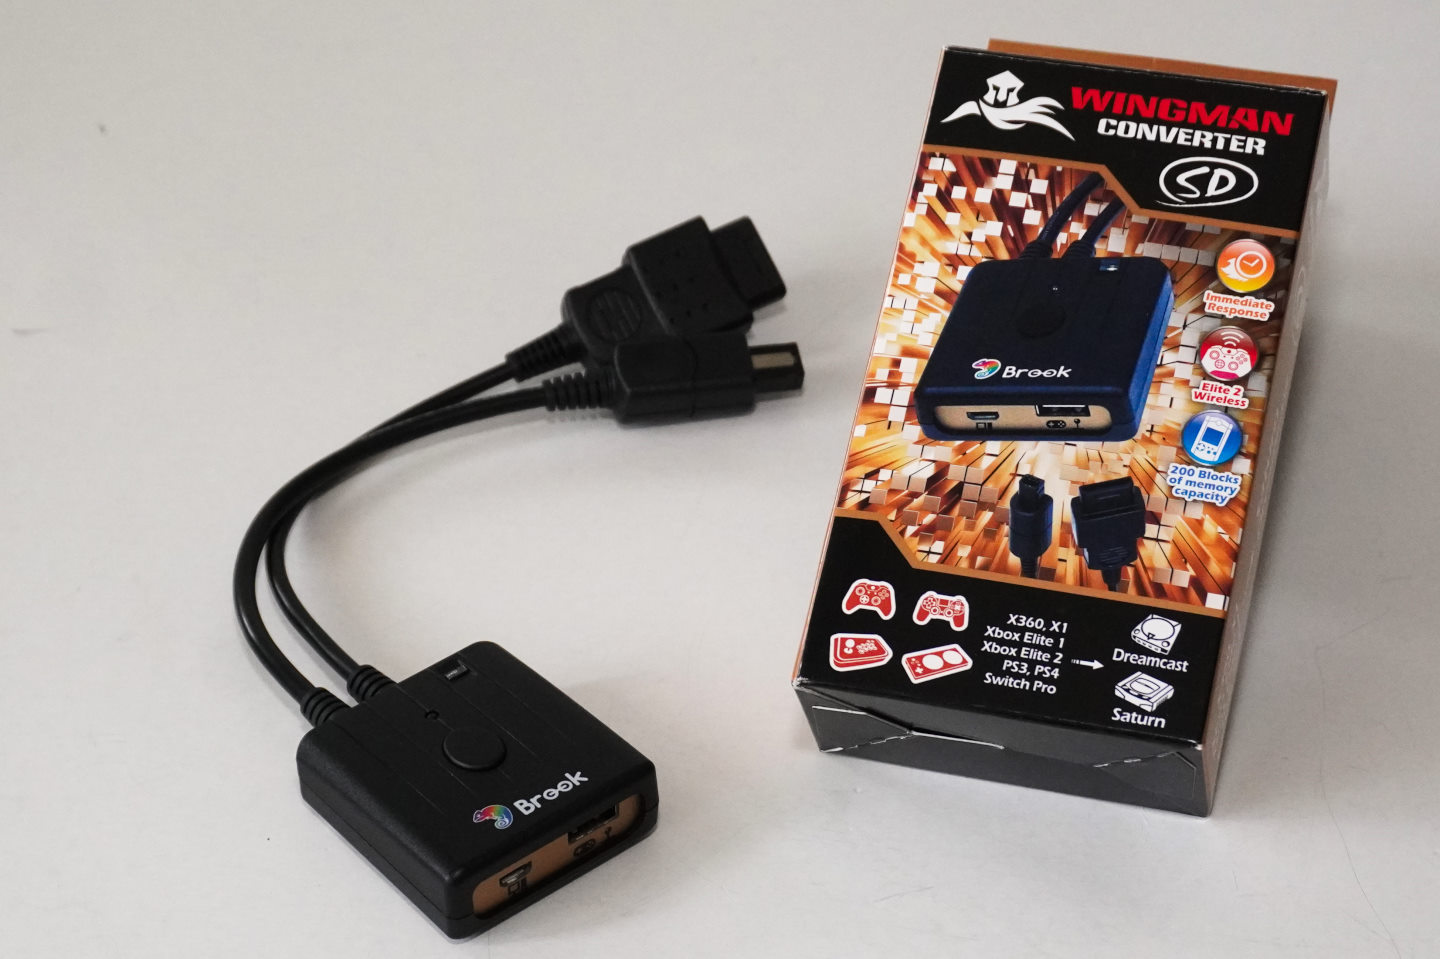 Wingman SD是可以將多種遊戲控制器轉接為XInput以及Sage Saturn、Dreamcast的轉接器。